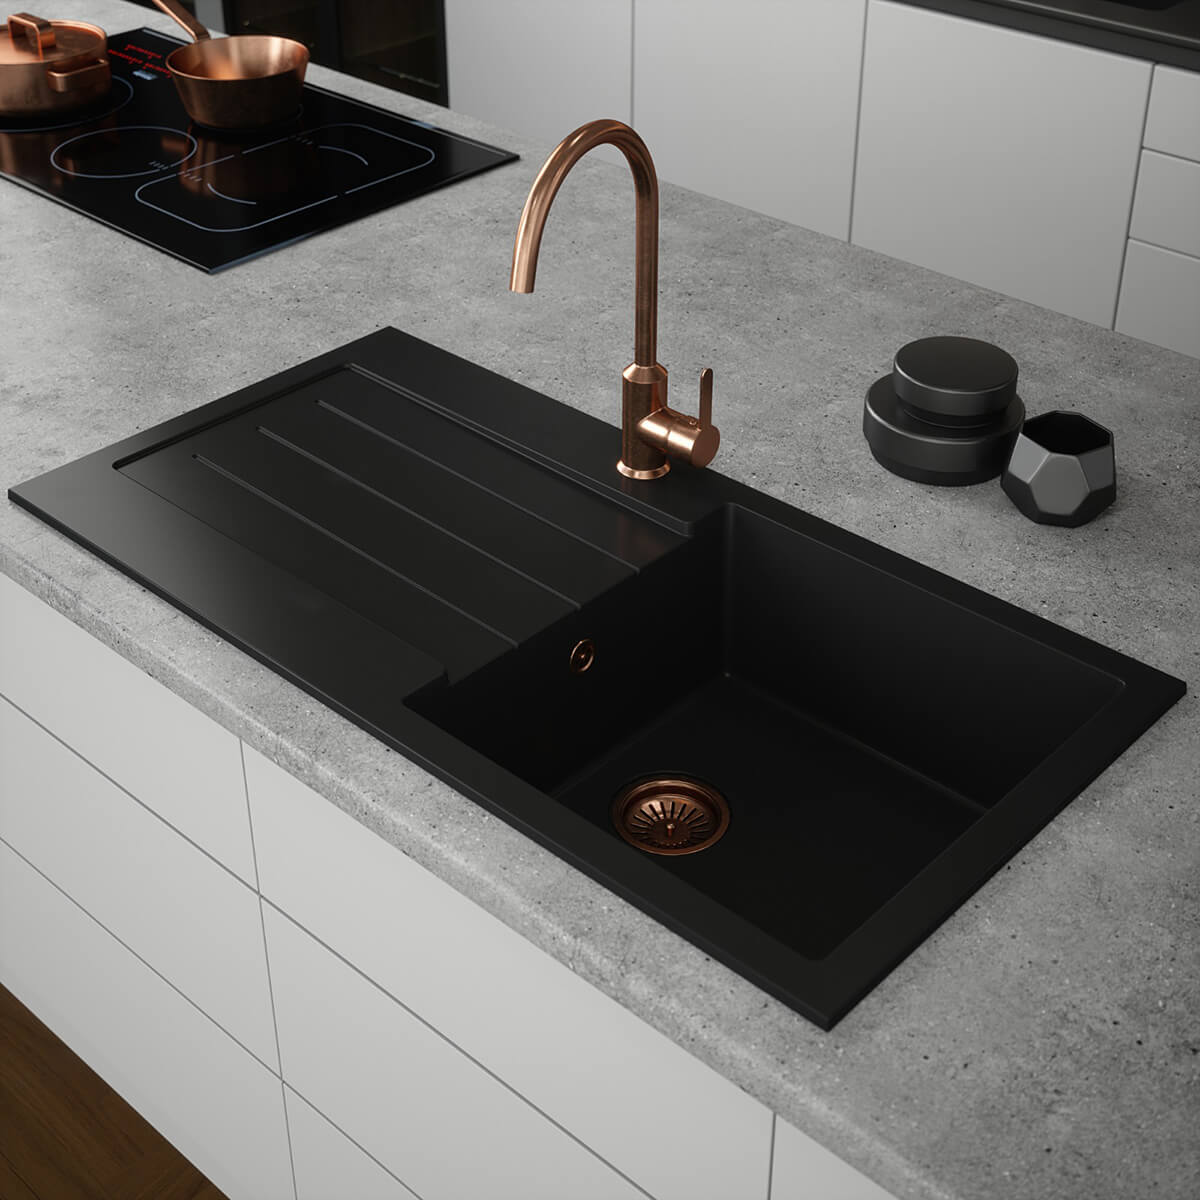 Ellsi Comite Granite Single Bowl Kitchen Sink & Waste - Black (11257)